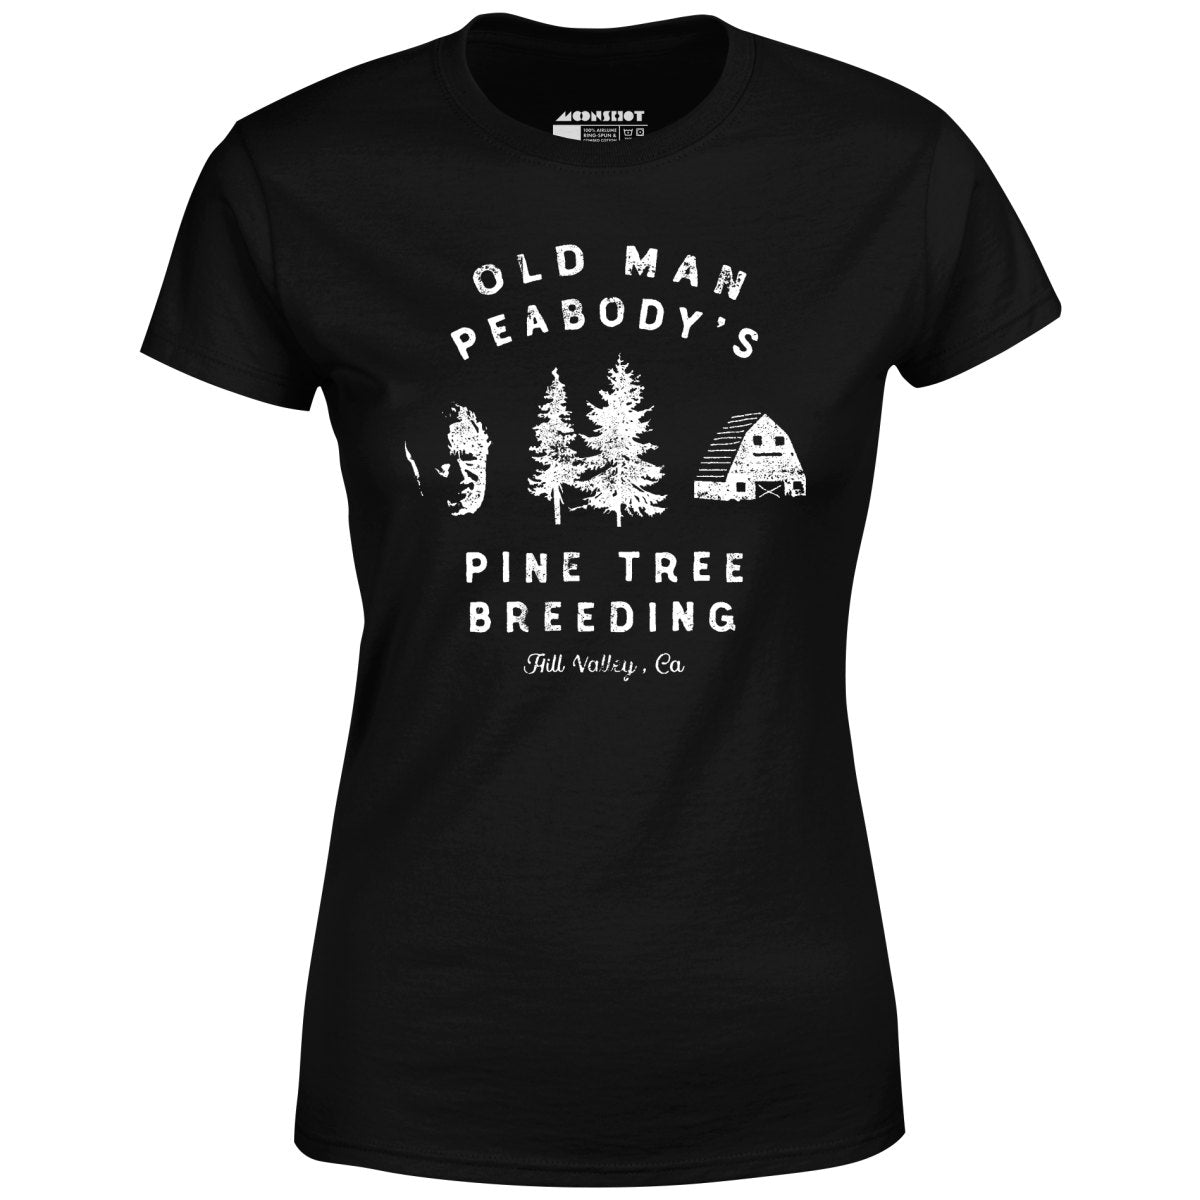 Old Man Peabody's Pine Tree Breeding - Women's T-Shirt